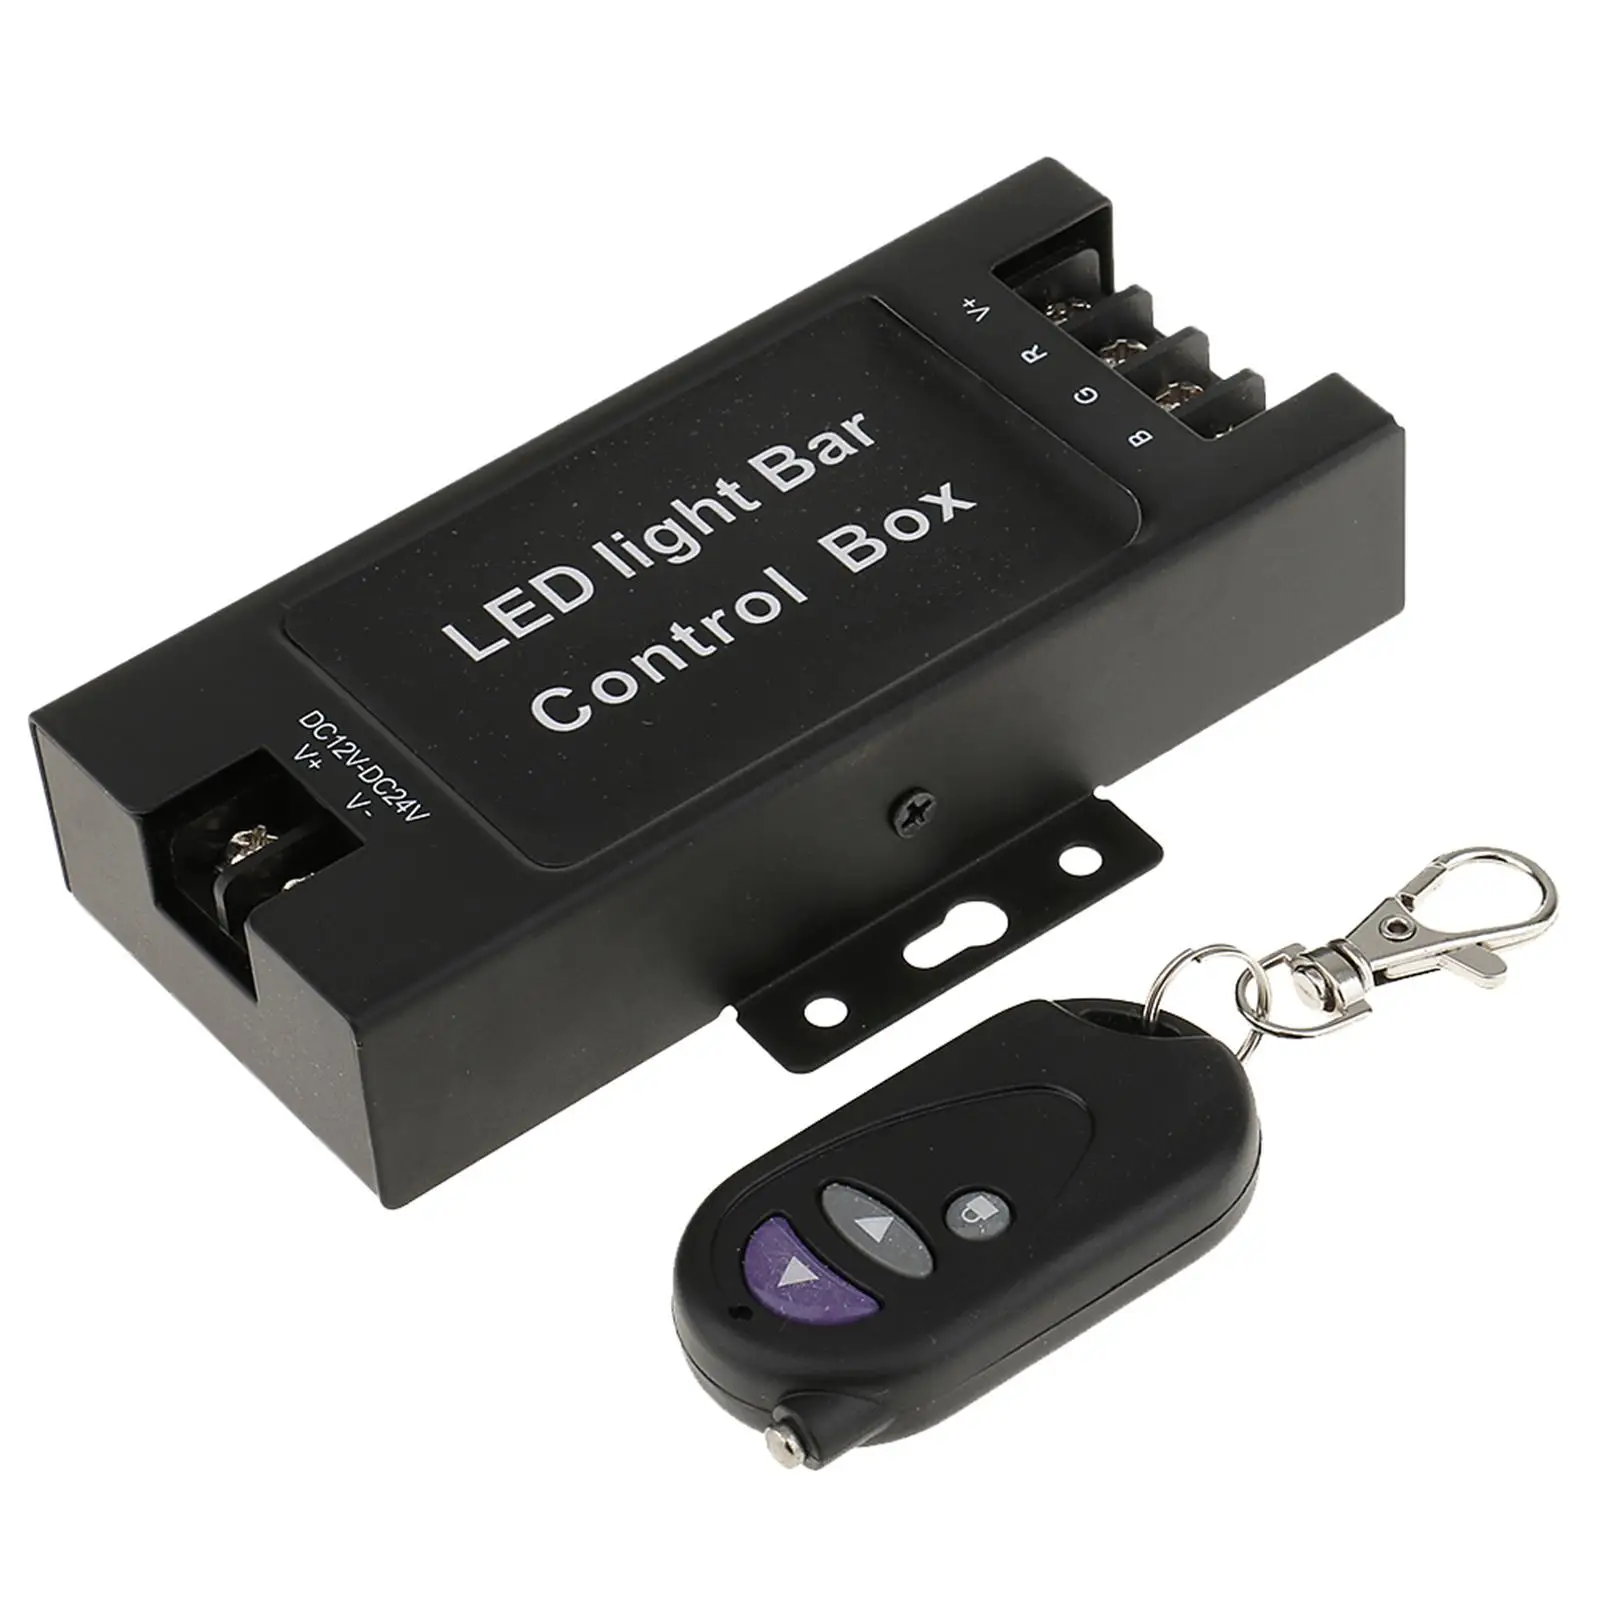 12V-24V LED Light Bar Battery Box Flash Strobe Controller + Wireless Remote